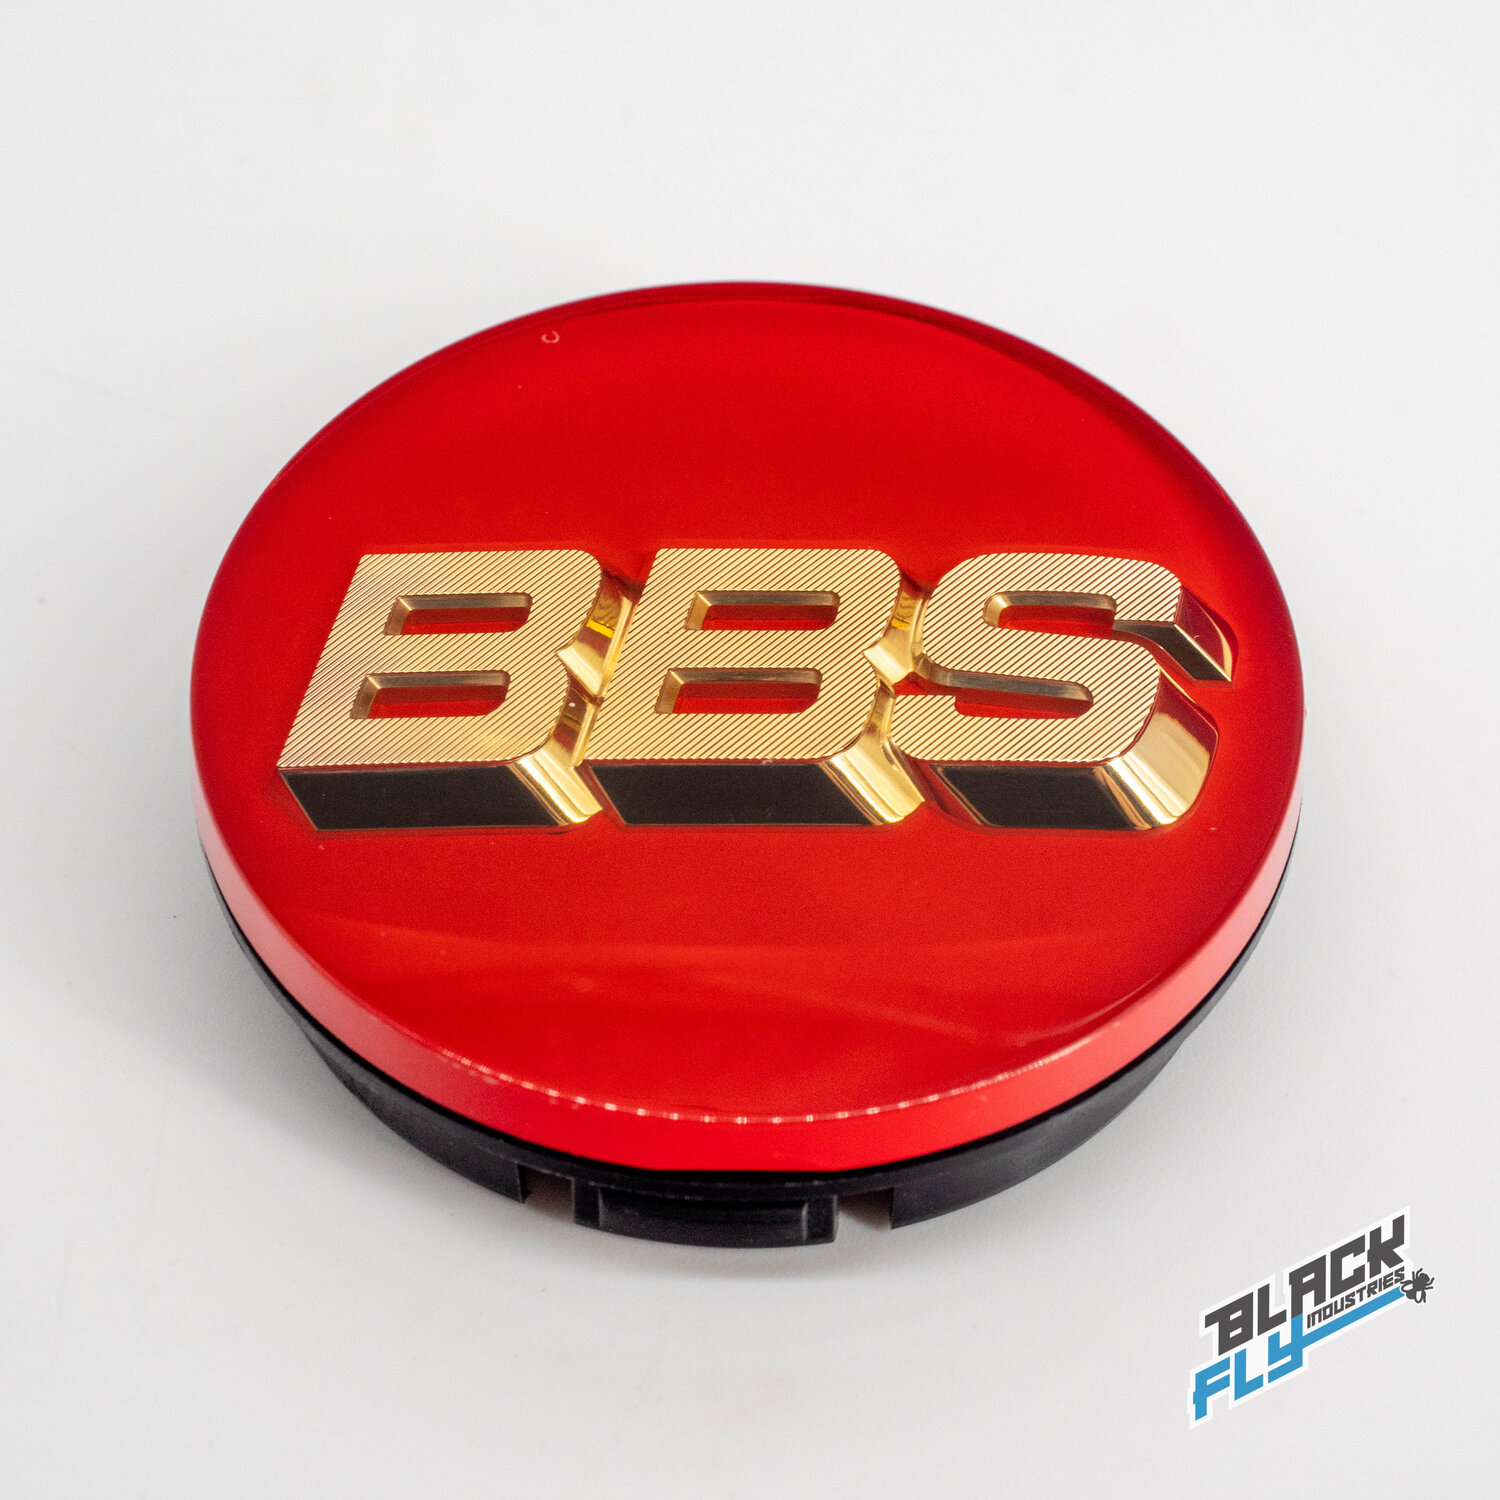 4x genuine bbs centre caps rouge et or 3D bbs logo 56mm lm rx ch neuf